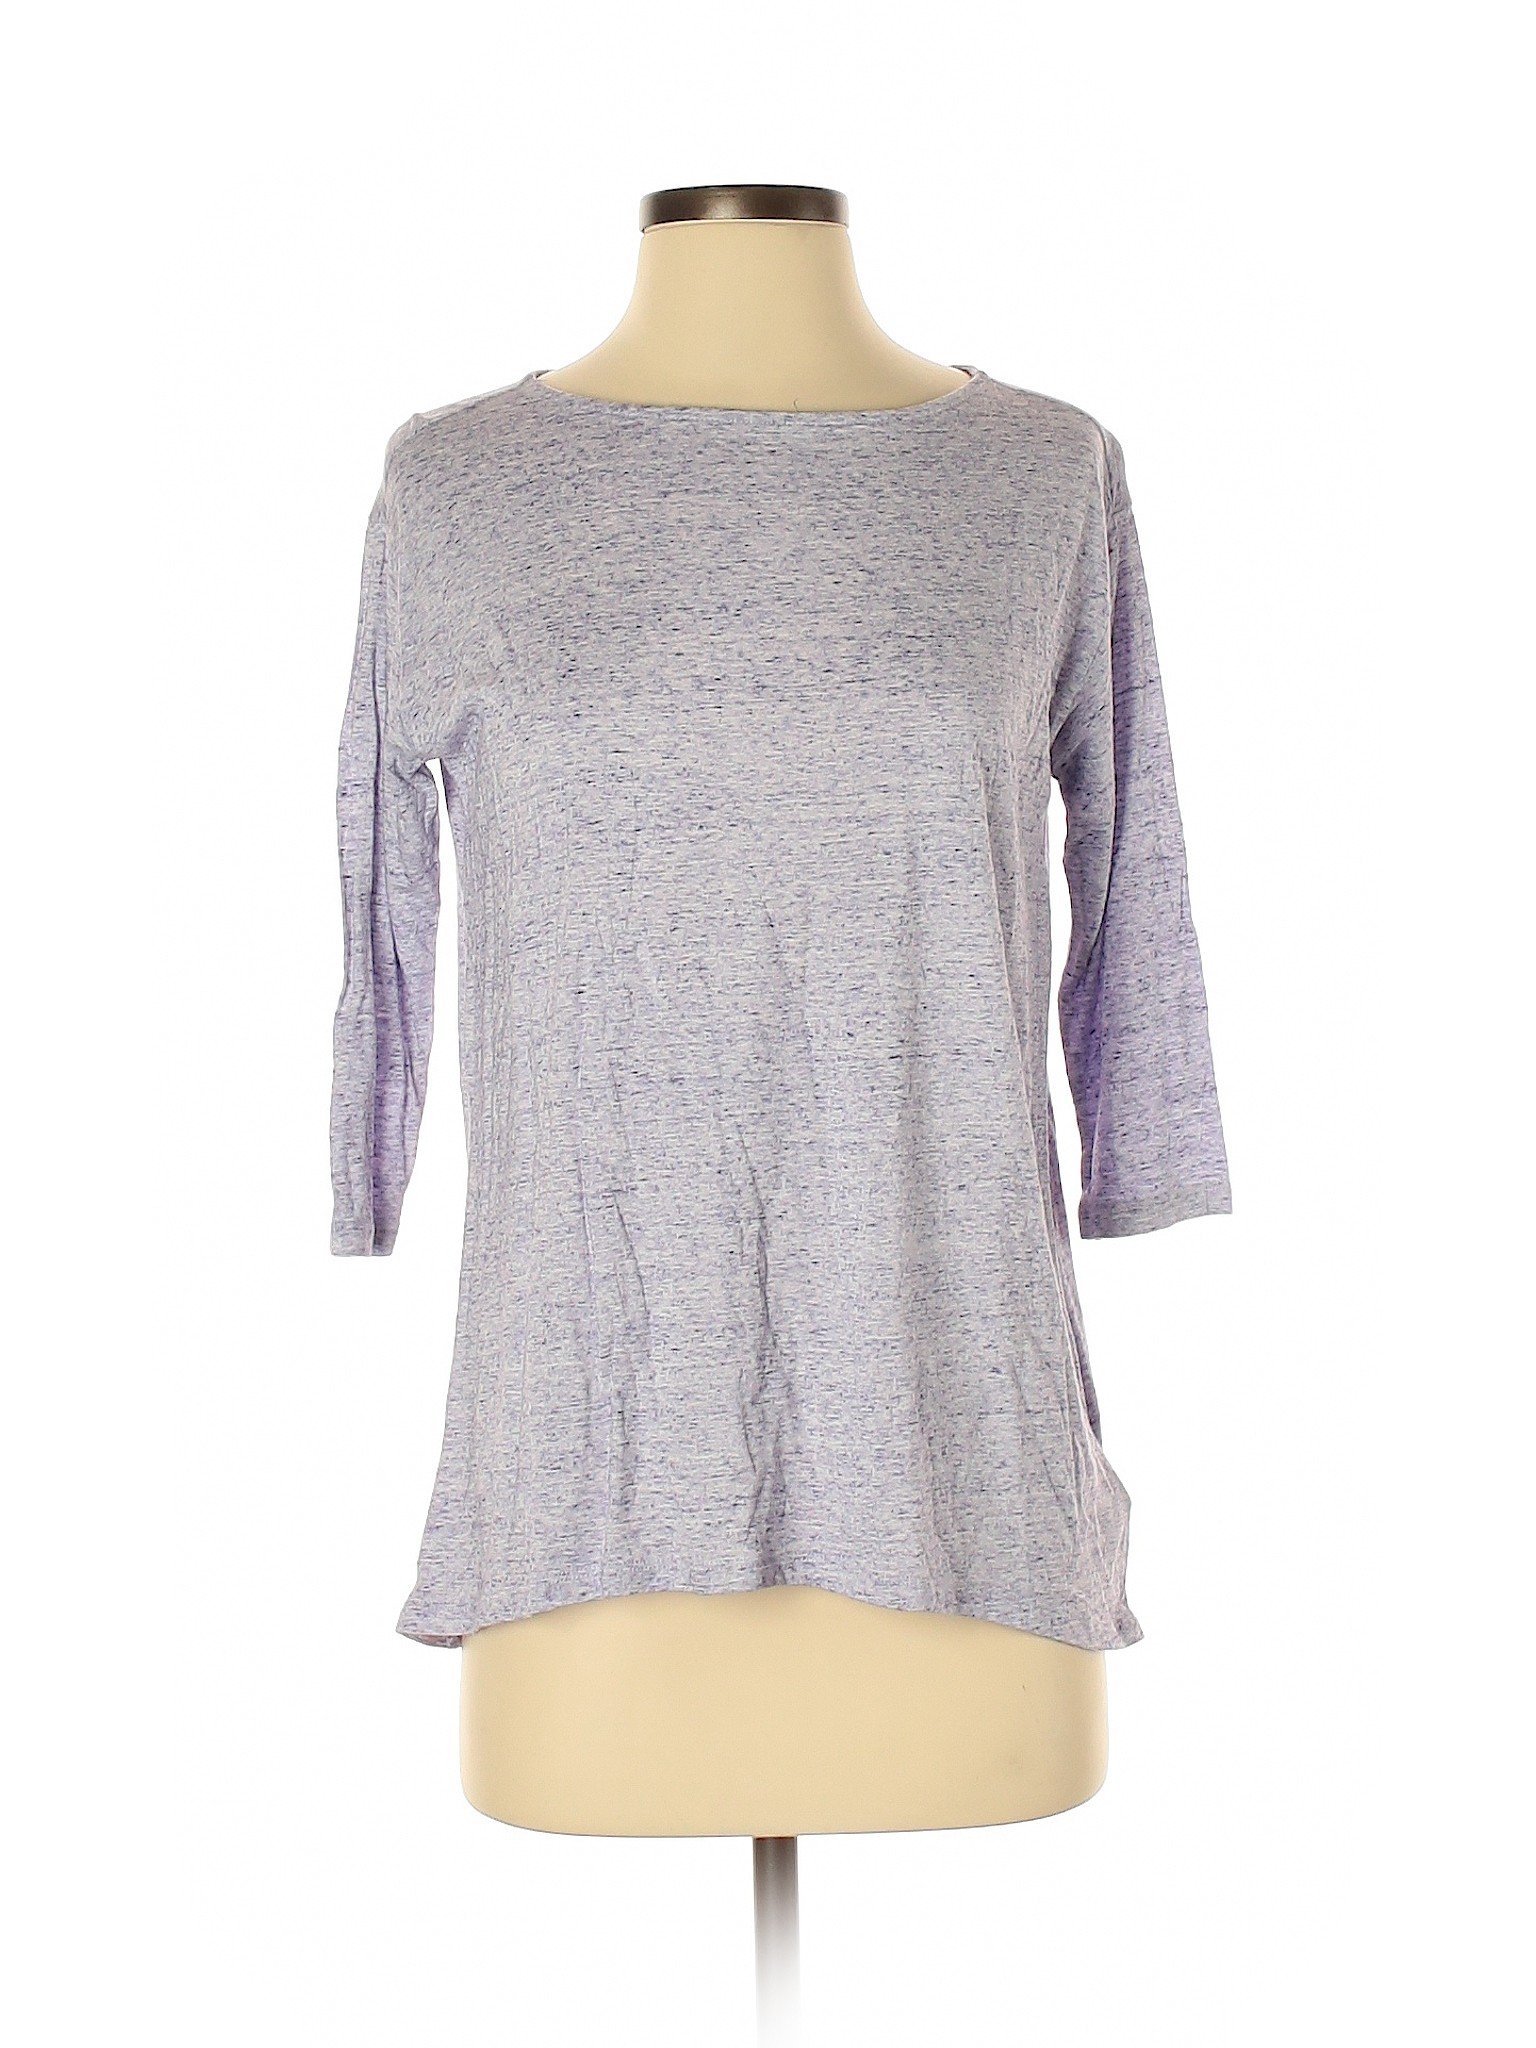 Gap Women Purple 3/4 Sleeve T-Shirt XS | eBay